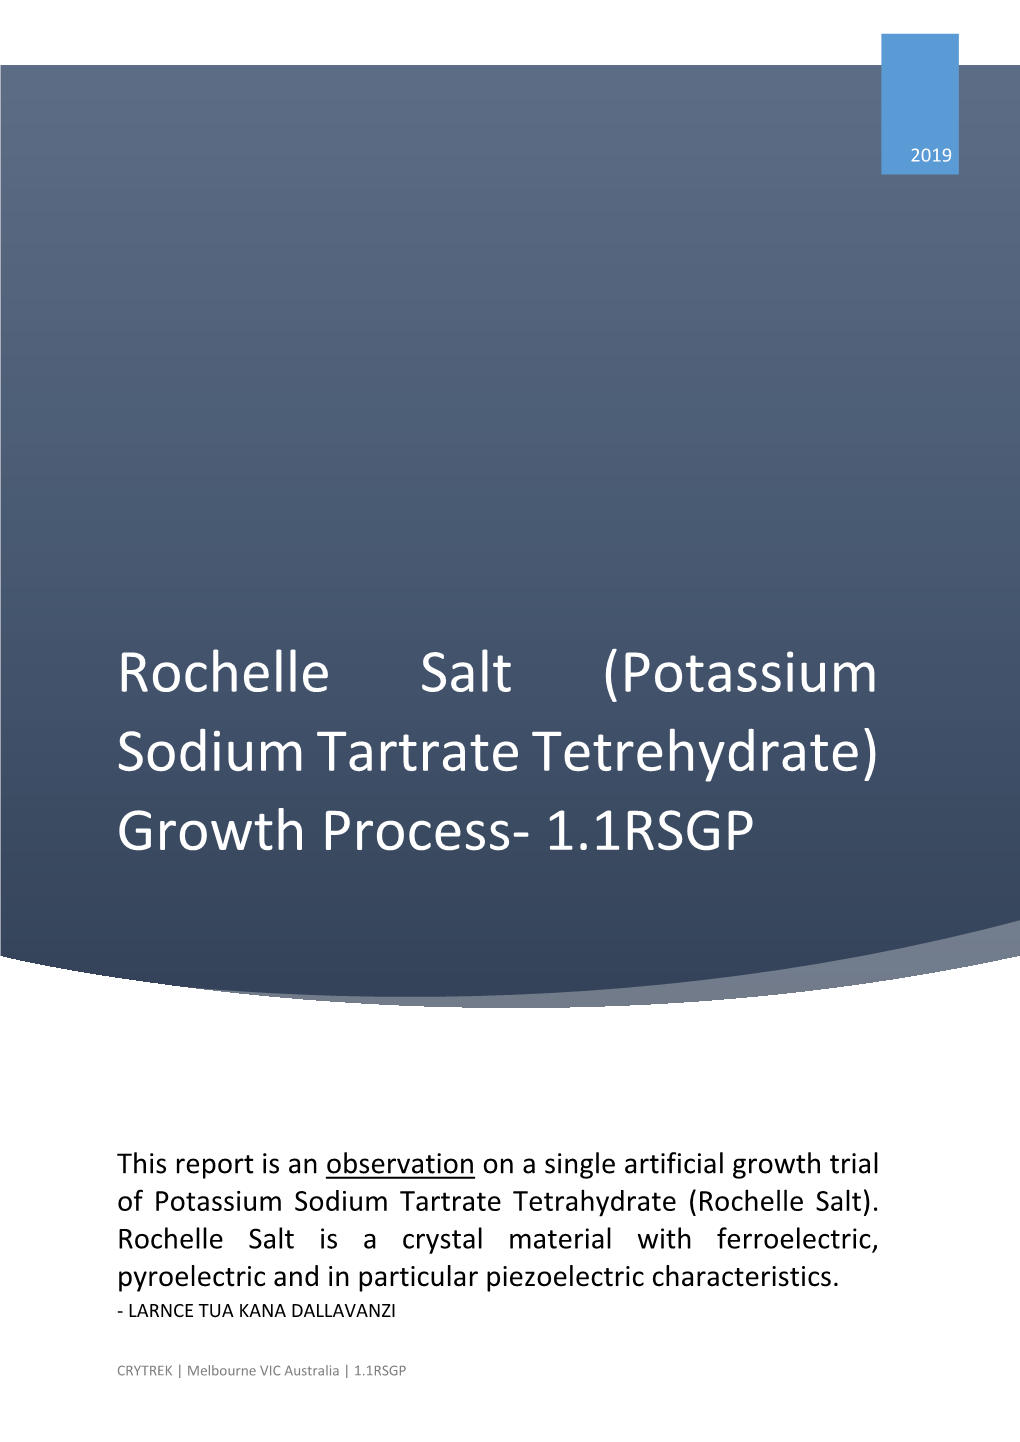 Rochelle Salt (Potassium Sodium Tartrate Tetrehydrate) Growth Process- 1.1RSGP